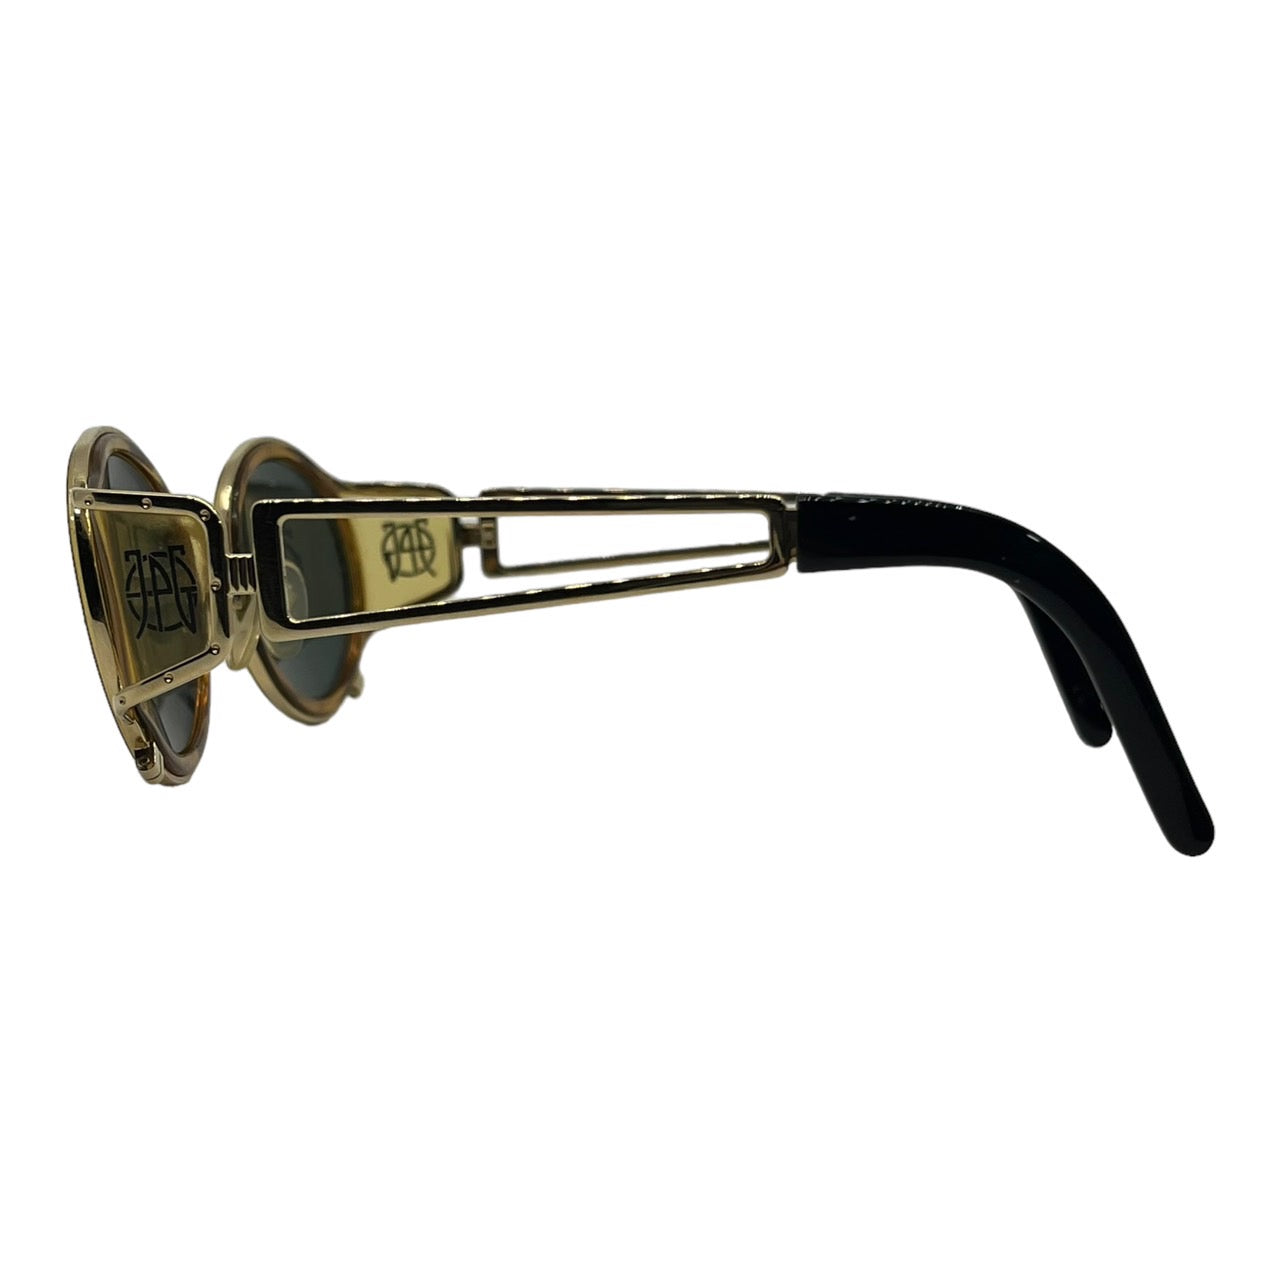 Jean Paul GAULTIER(ジャンポールゴルチエ) 90's ”JPG” logo sunglasses/ロゴサングラス 58-5201 ゴールド 90年代